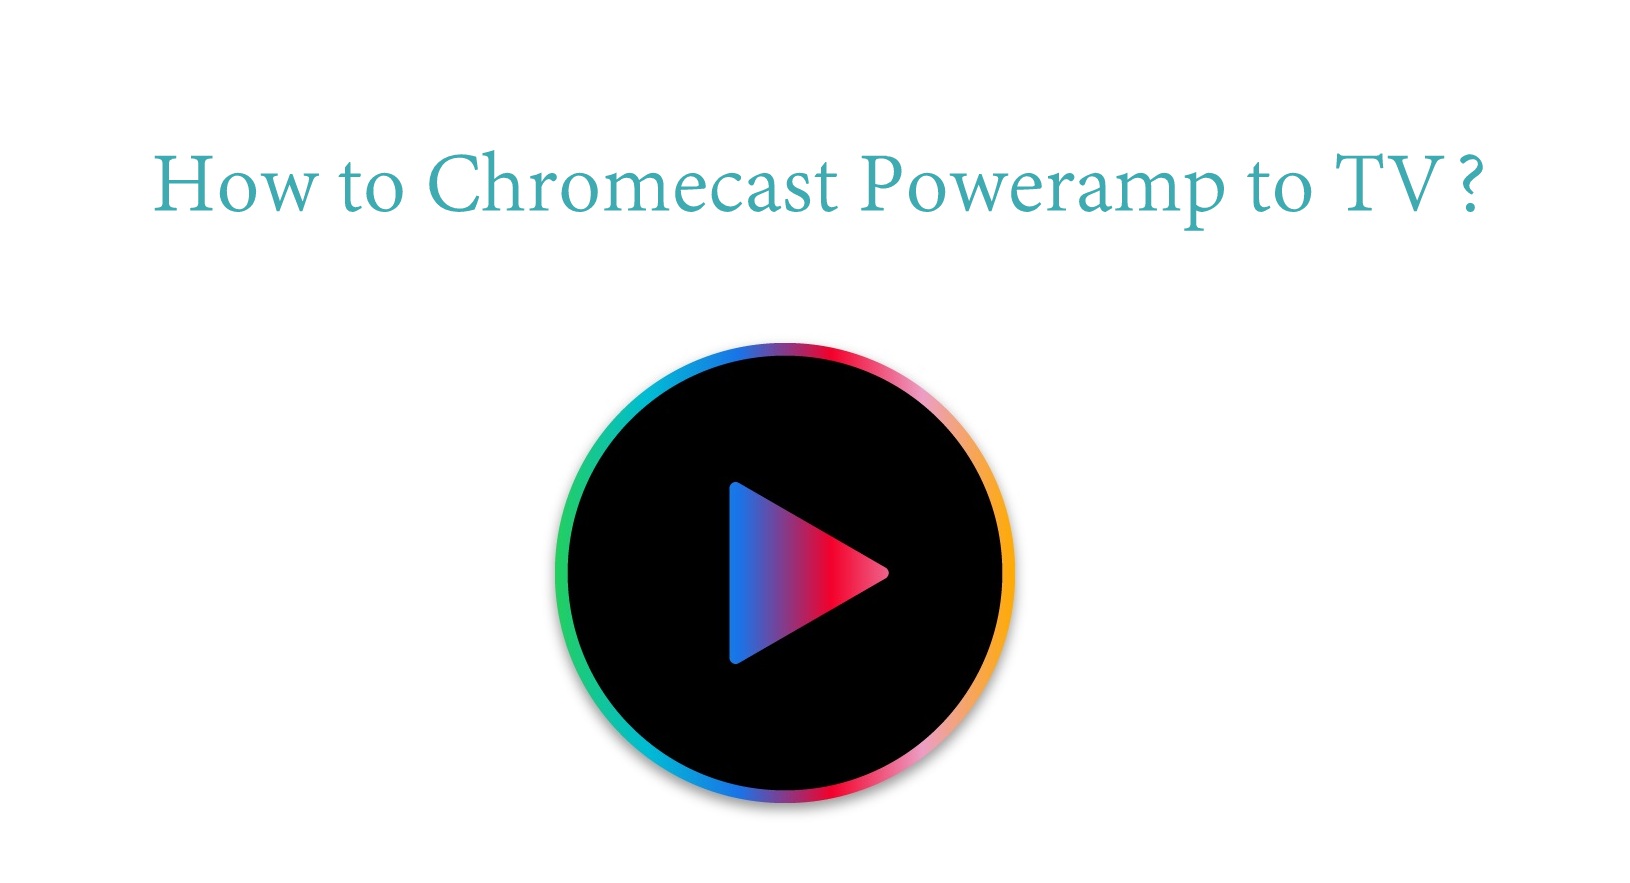 Chromecast Poweramp